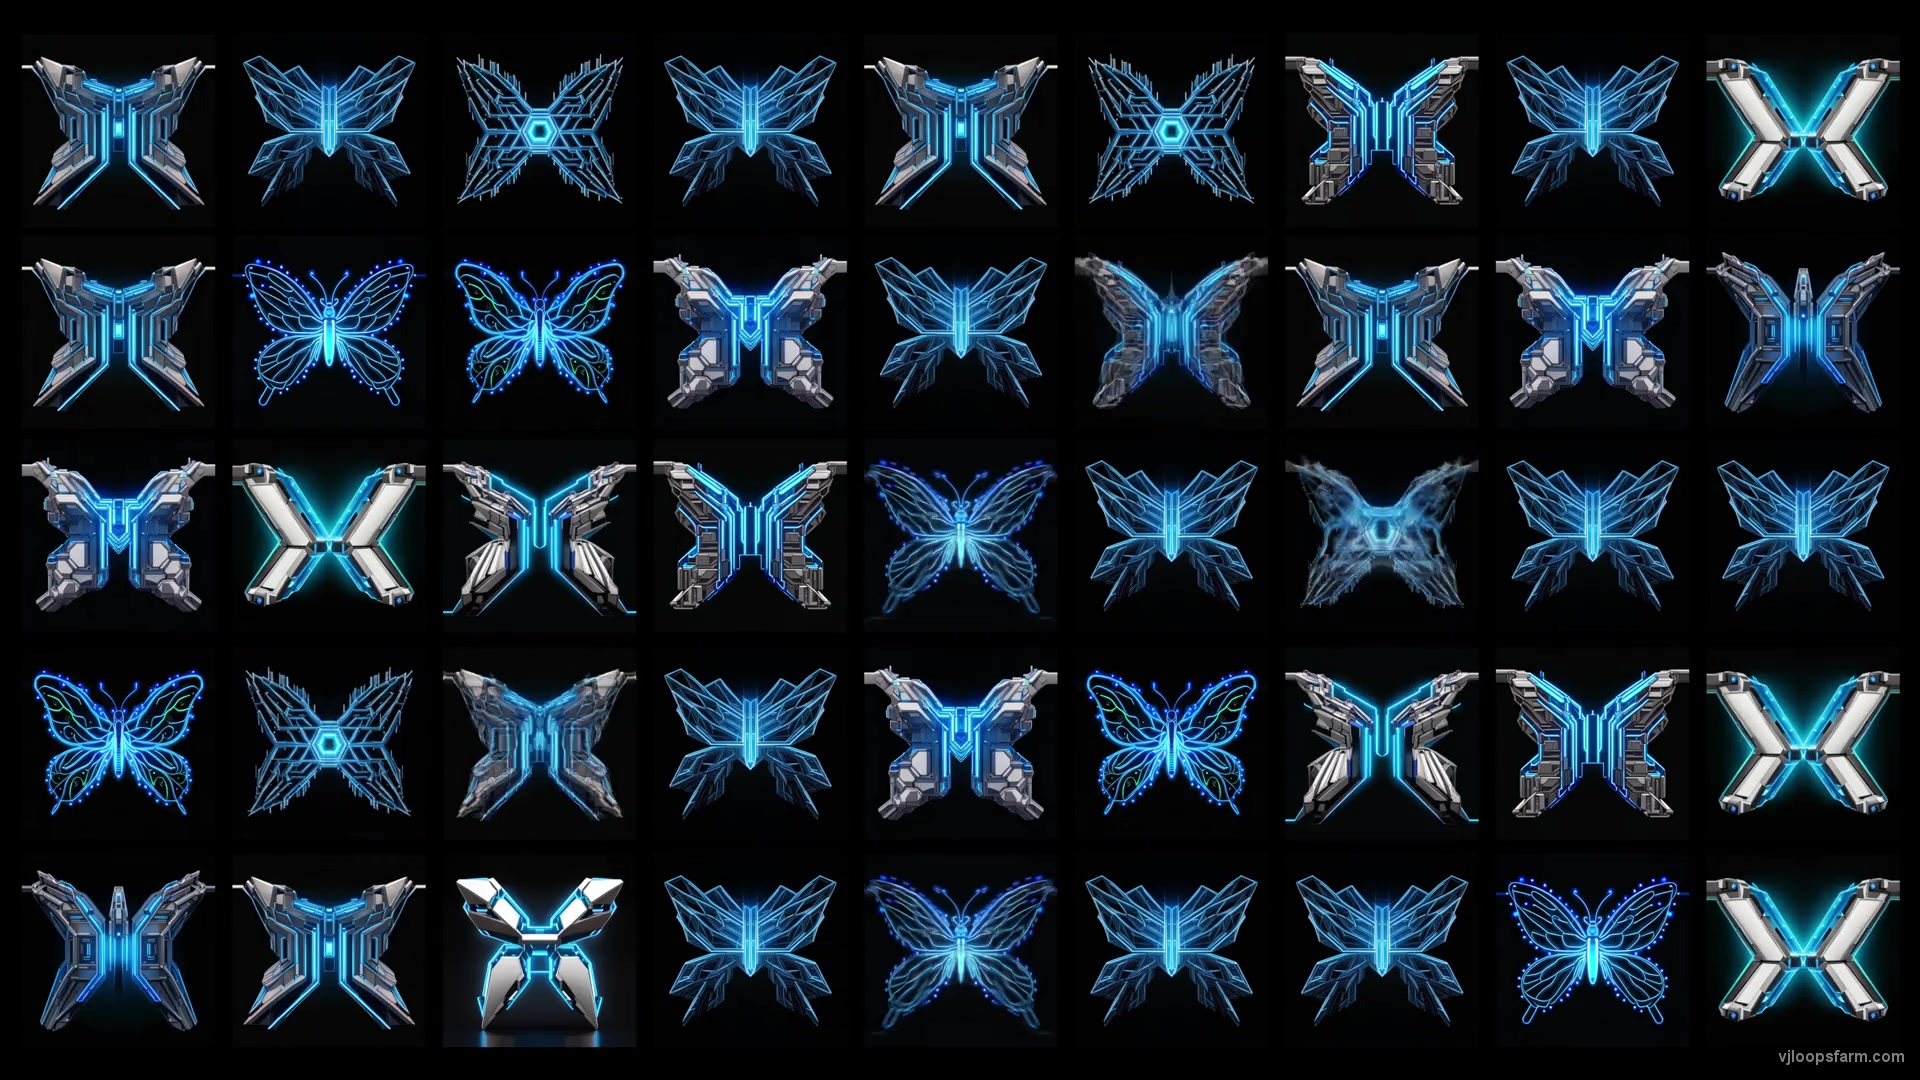 Cyberpunk Butterfly Mesh Mix Pattern Random Video Motion Background